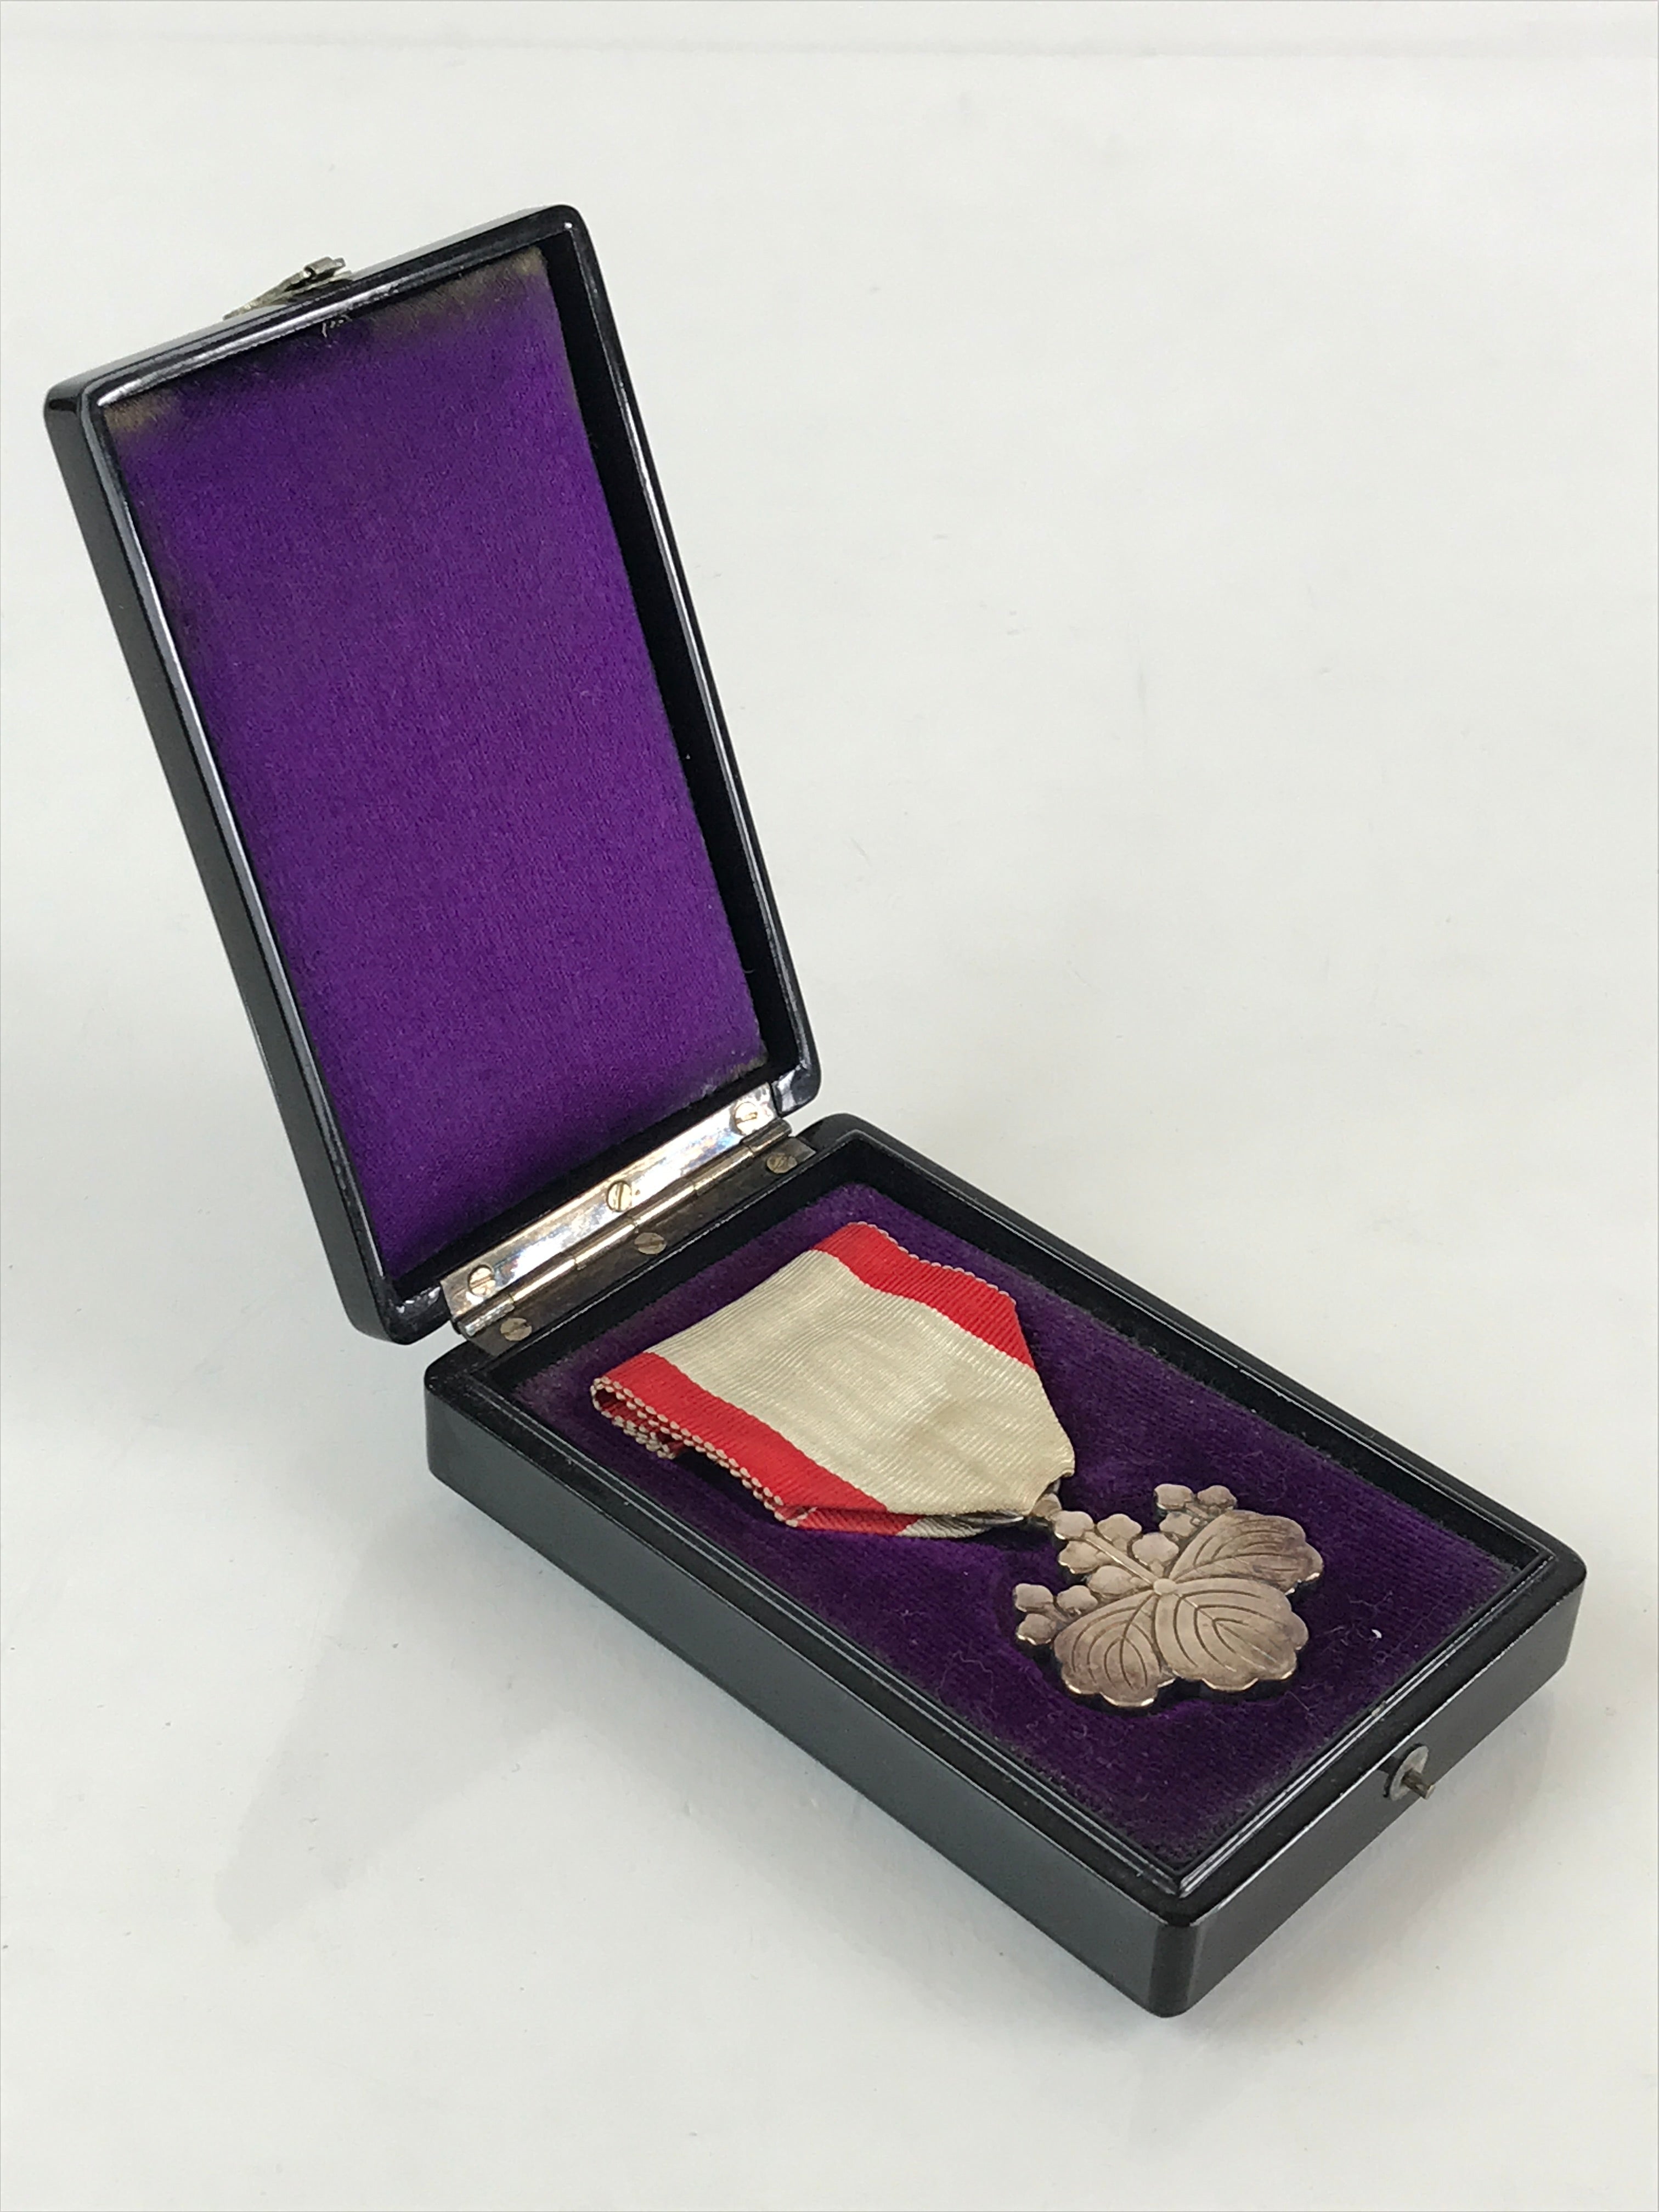 Japanese Army Medal 8th Class White Paulownia Badge Vtg WW2 Reward Box JK450